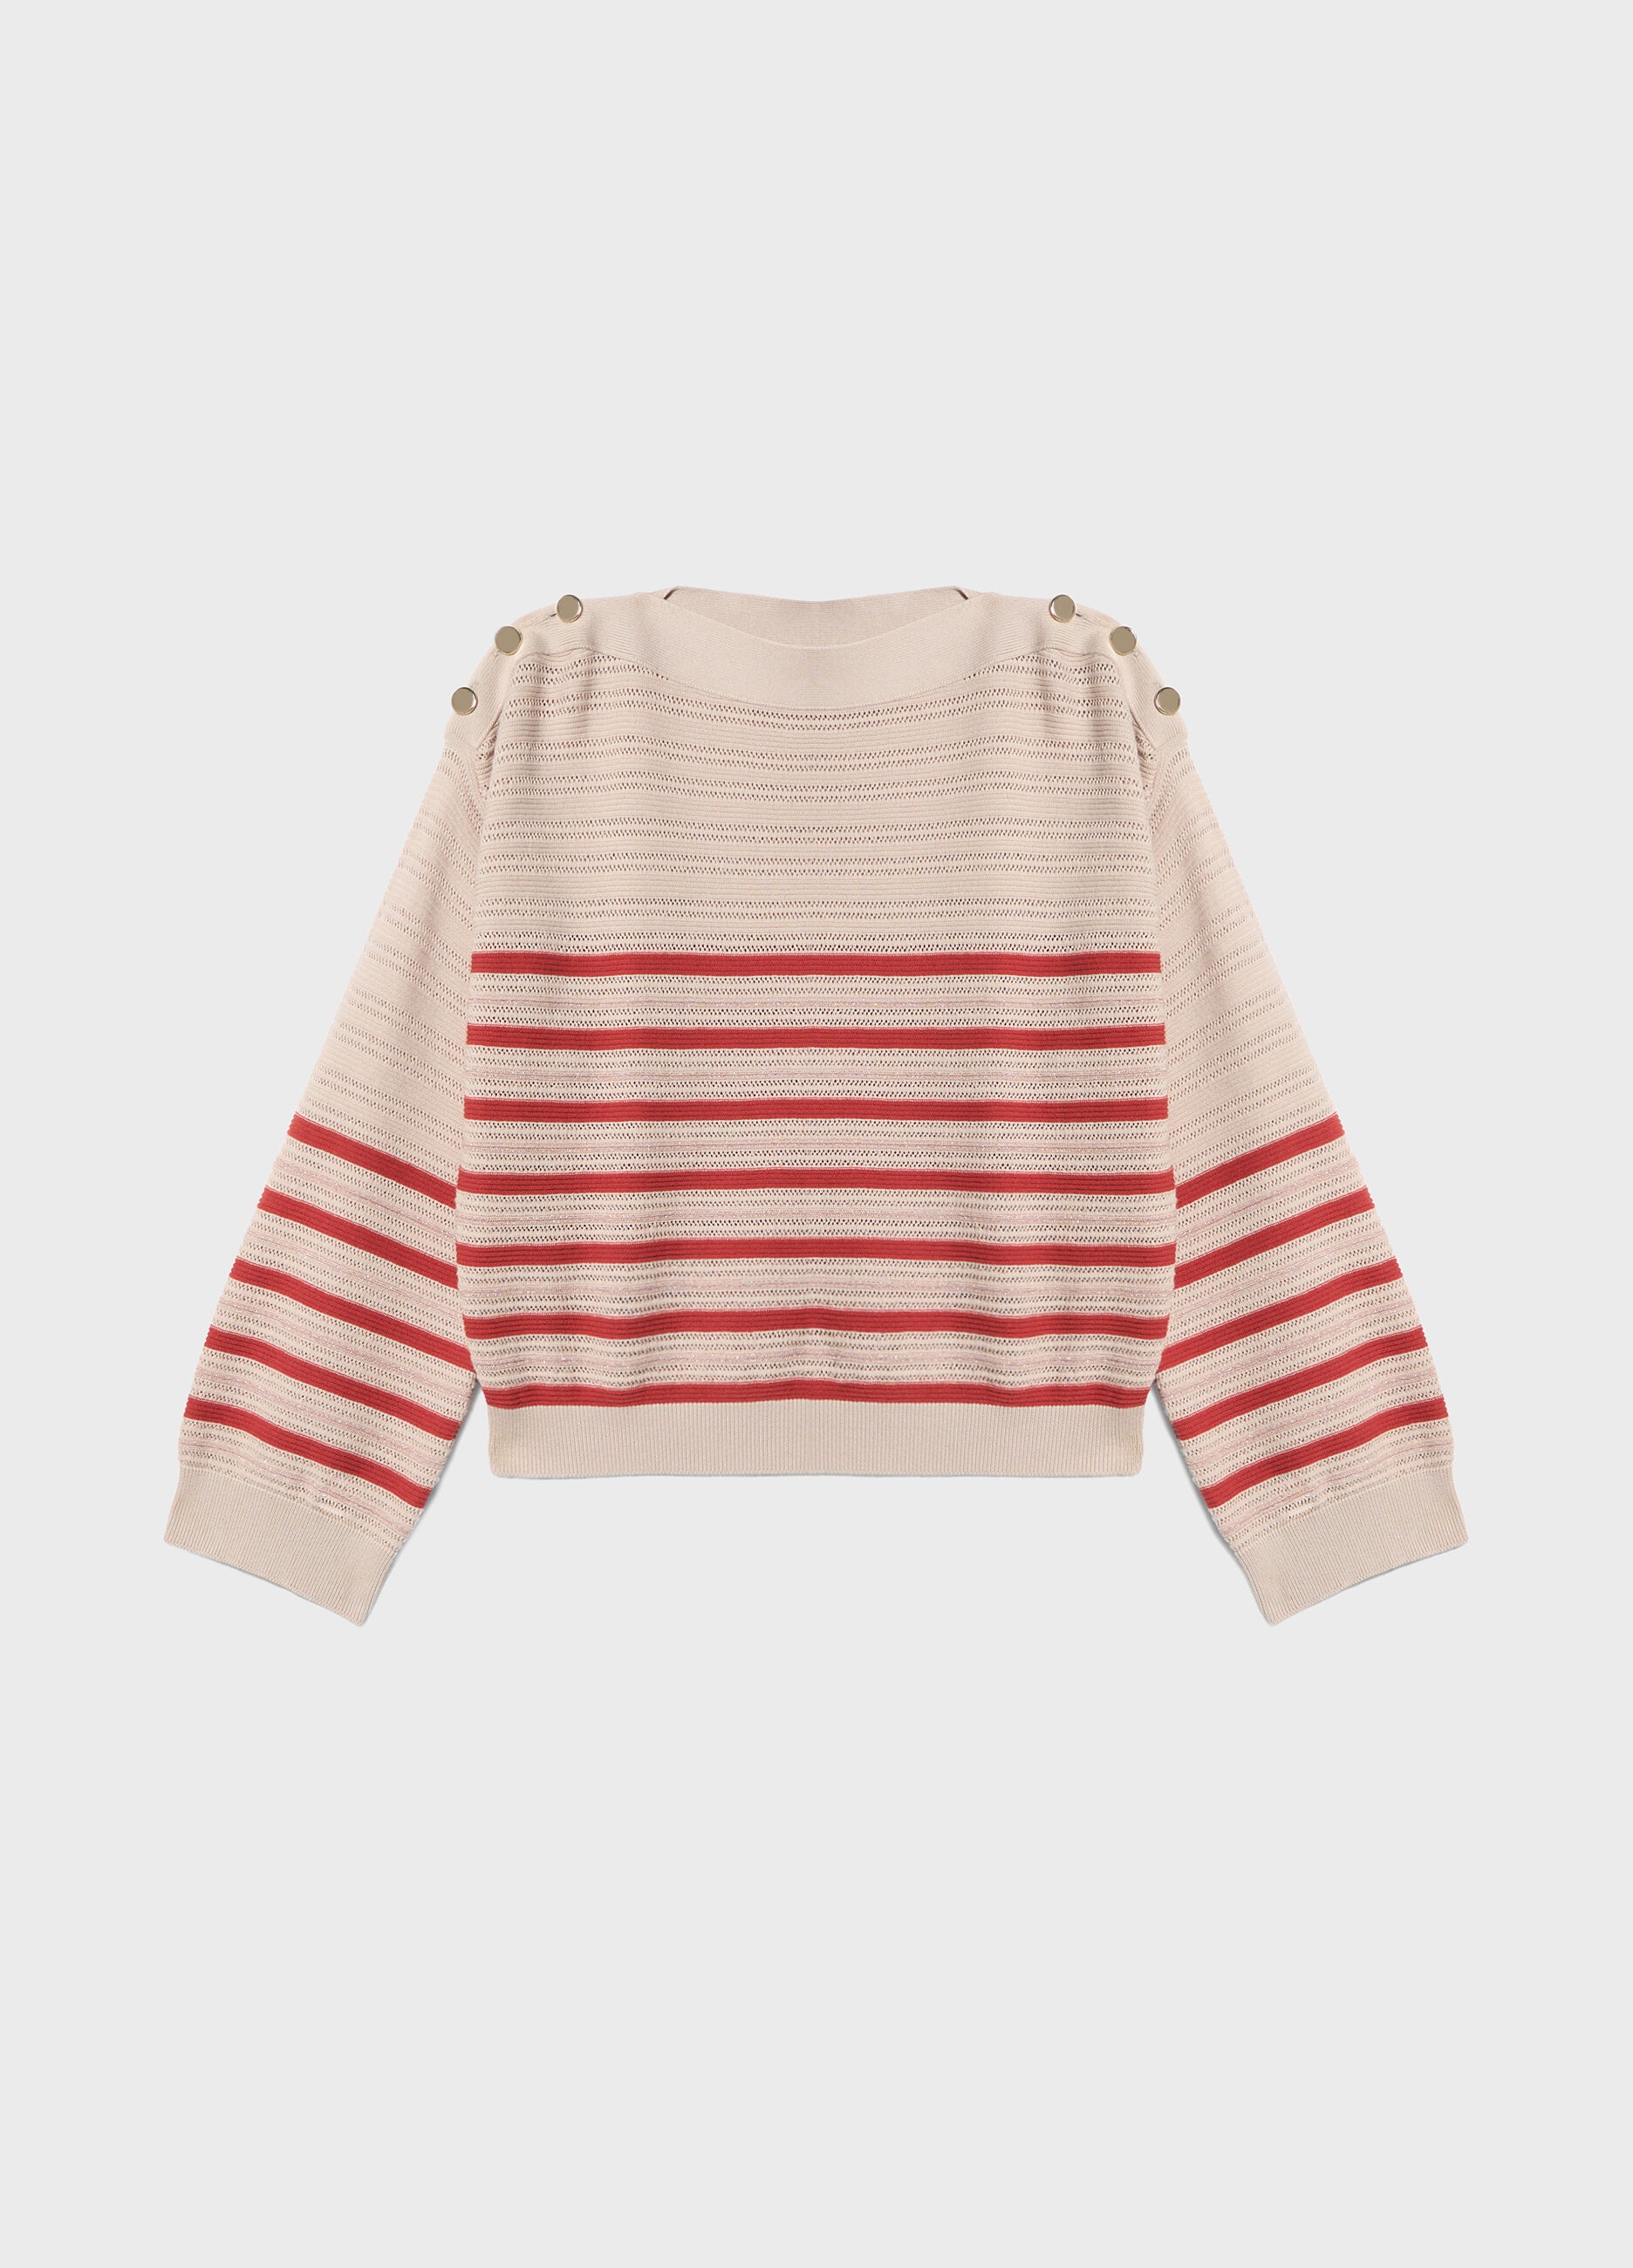 Maglione tricot mix di punti